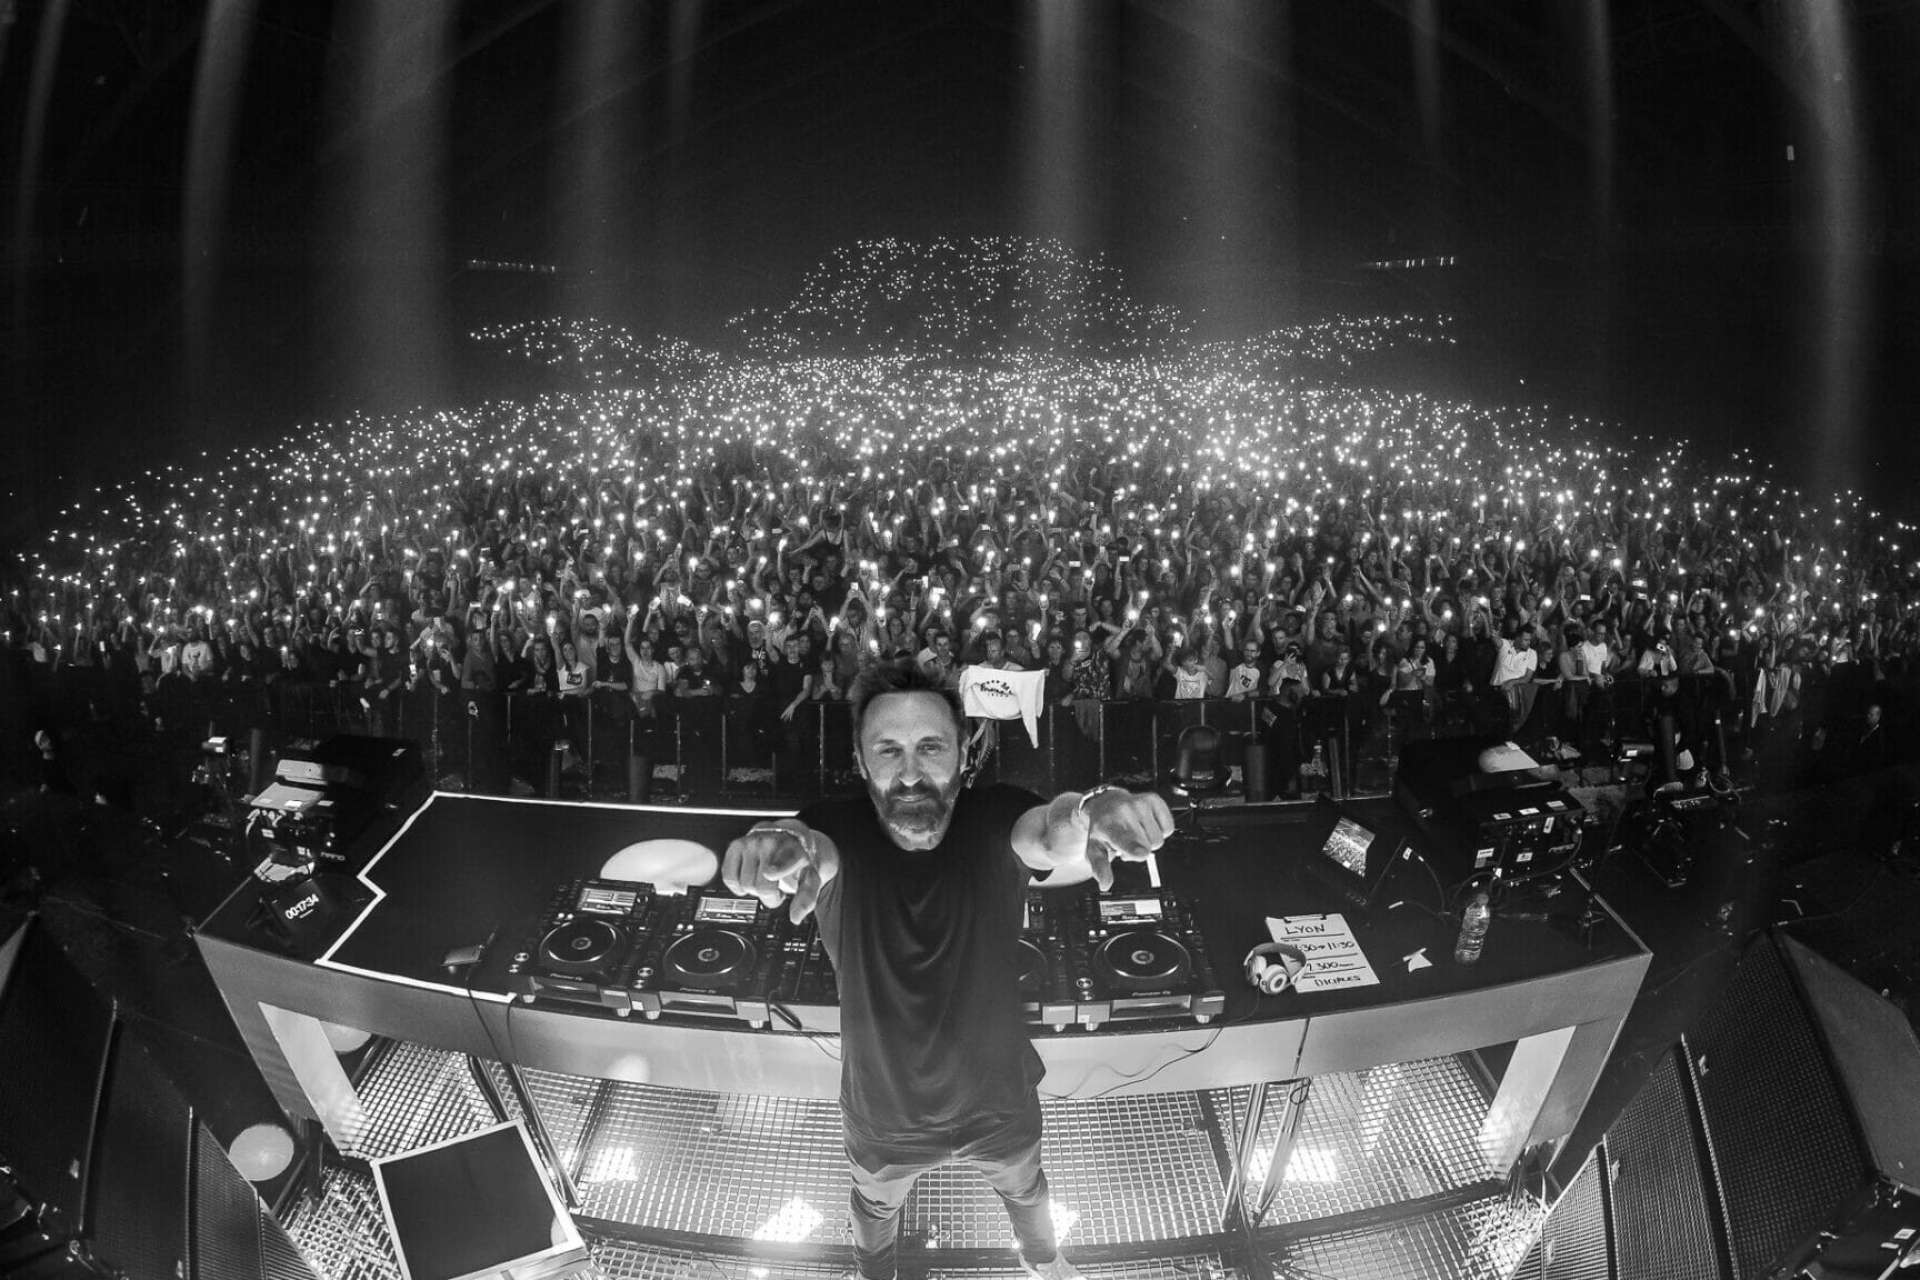 David Guetta: United At Home series, The superstar DJ, Monochrome. 1920x1280 HD Wallpaper.